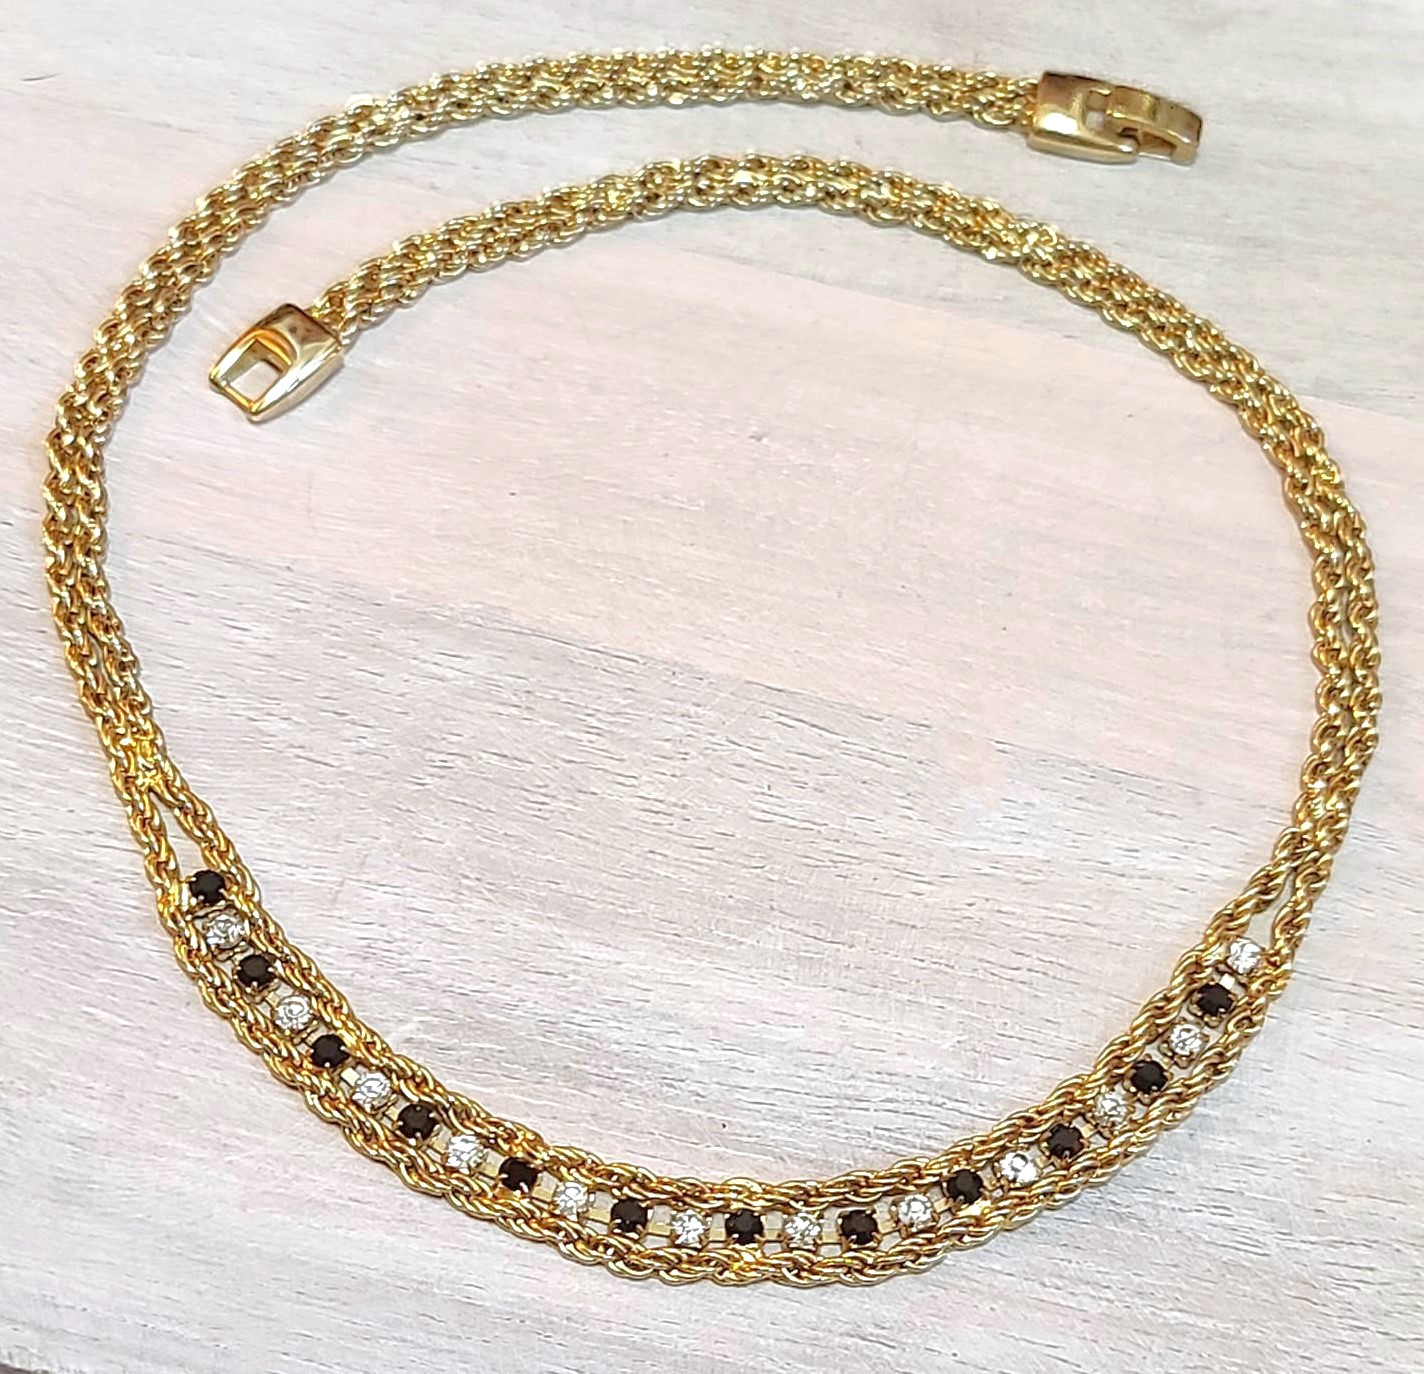 Rhinestone chain link necklace, black and white rhinestones,vintage necklace